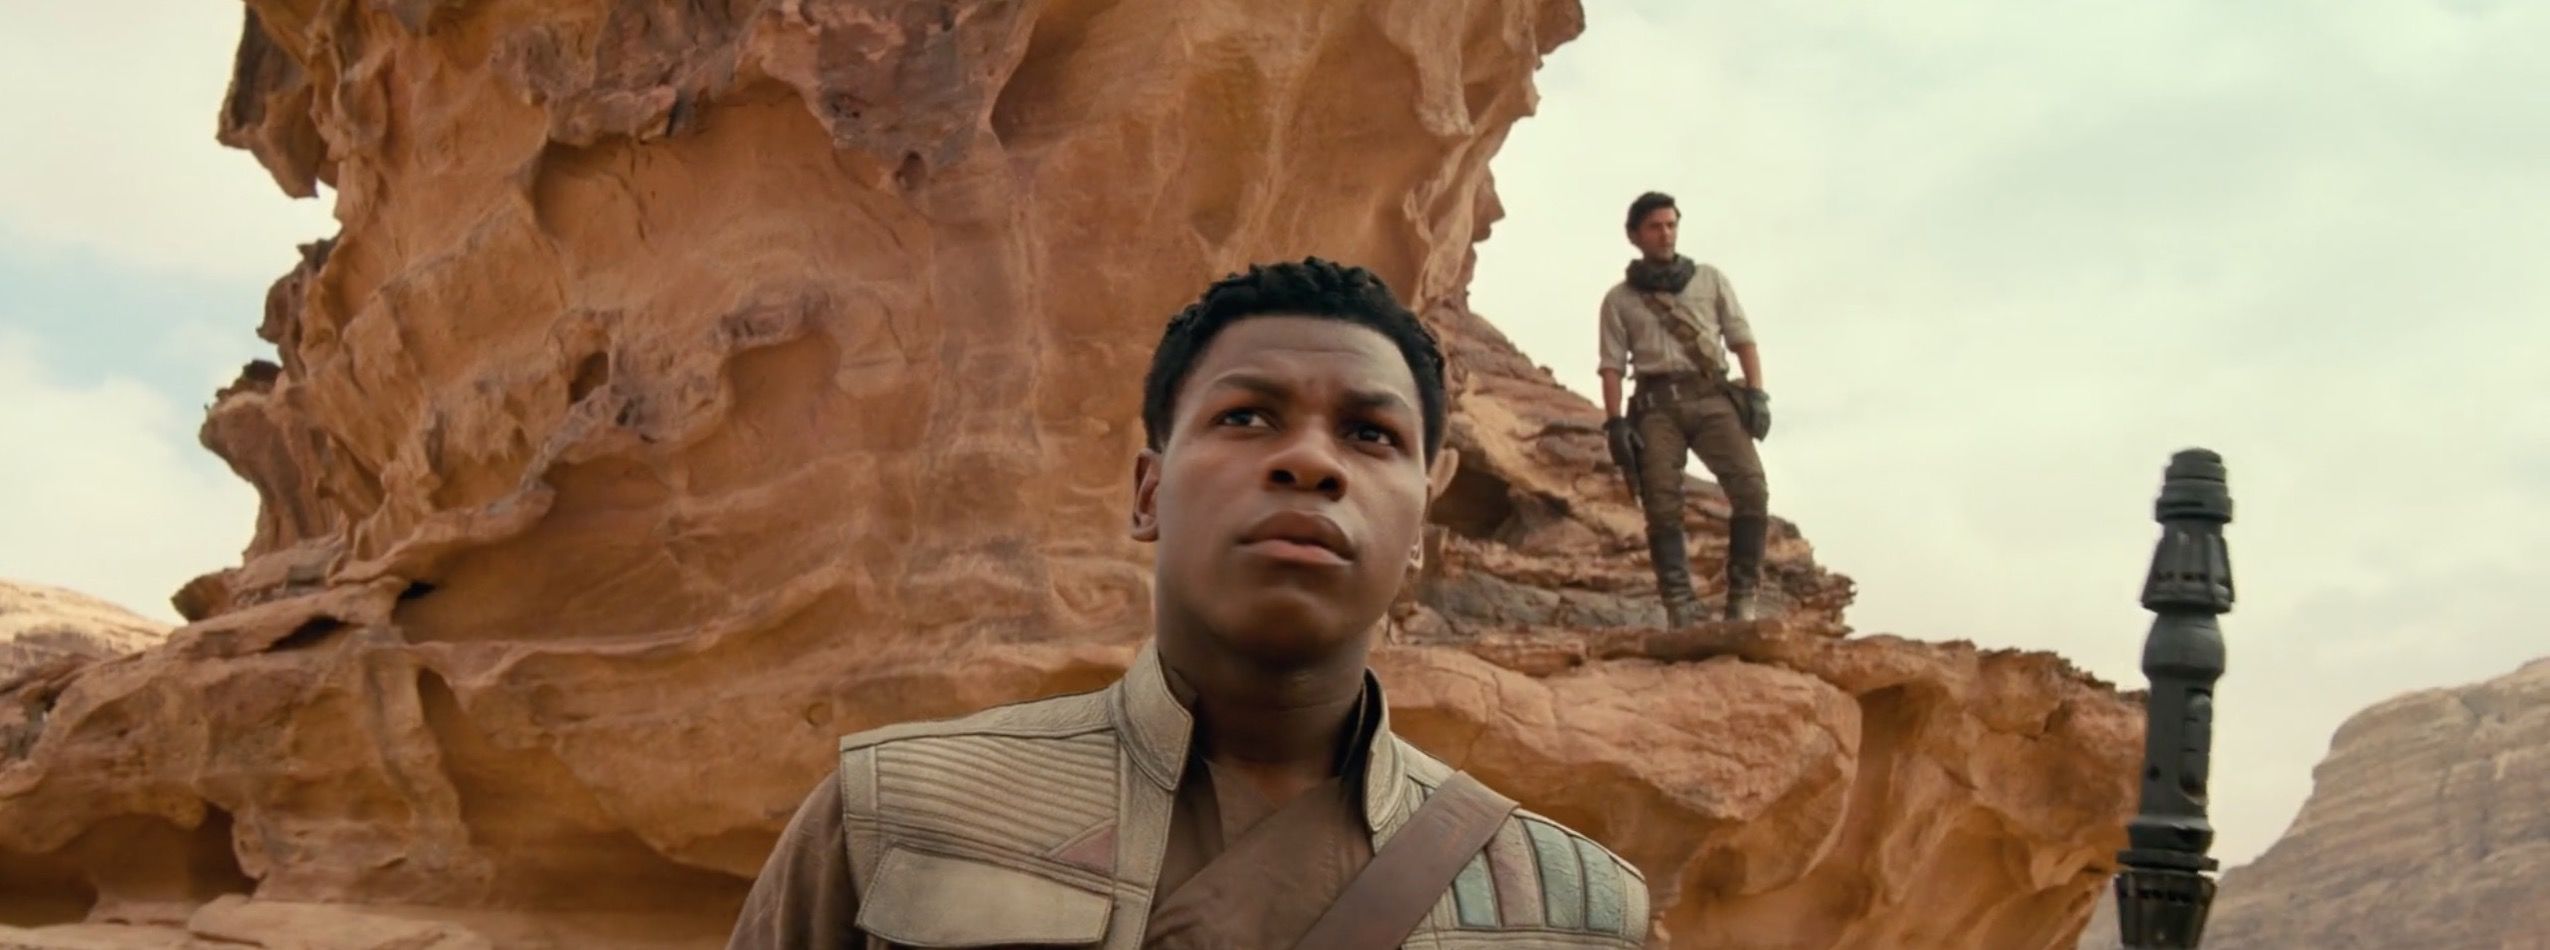 Star Wars Finn And Poe Don T Get Together But J J Abrams Still Teases Lgbtq Representation